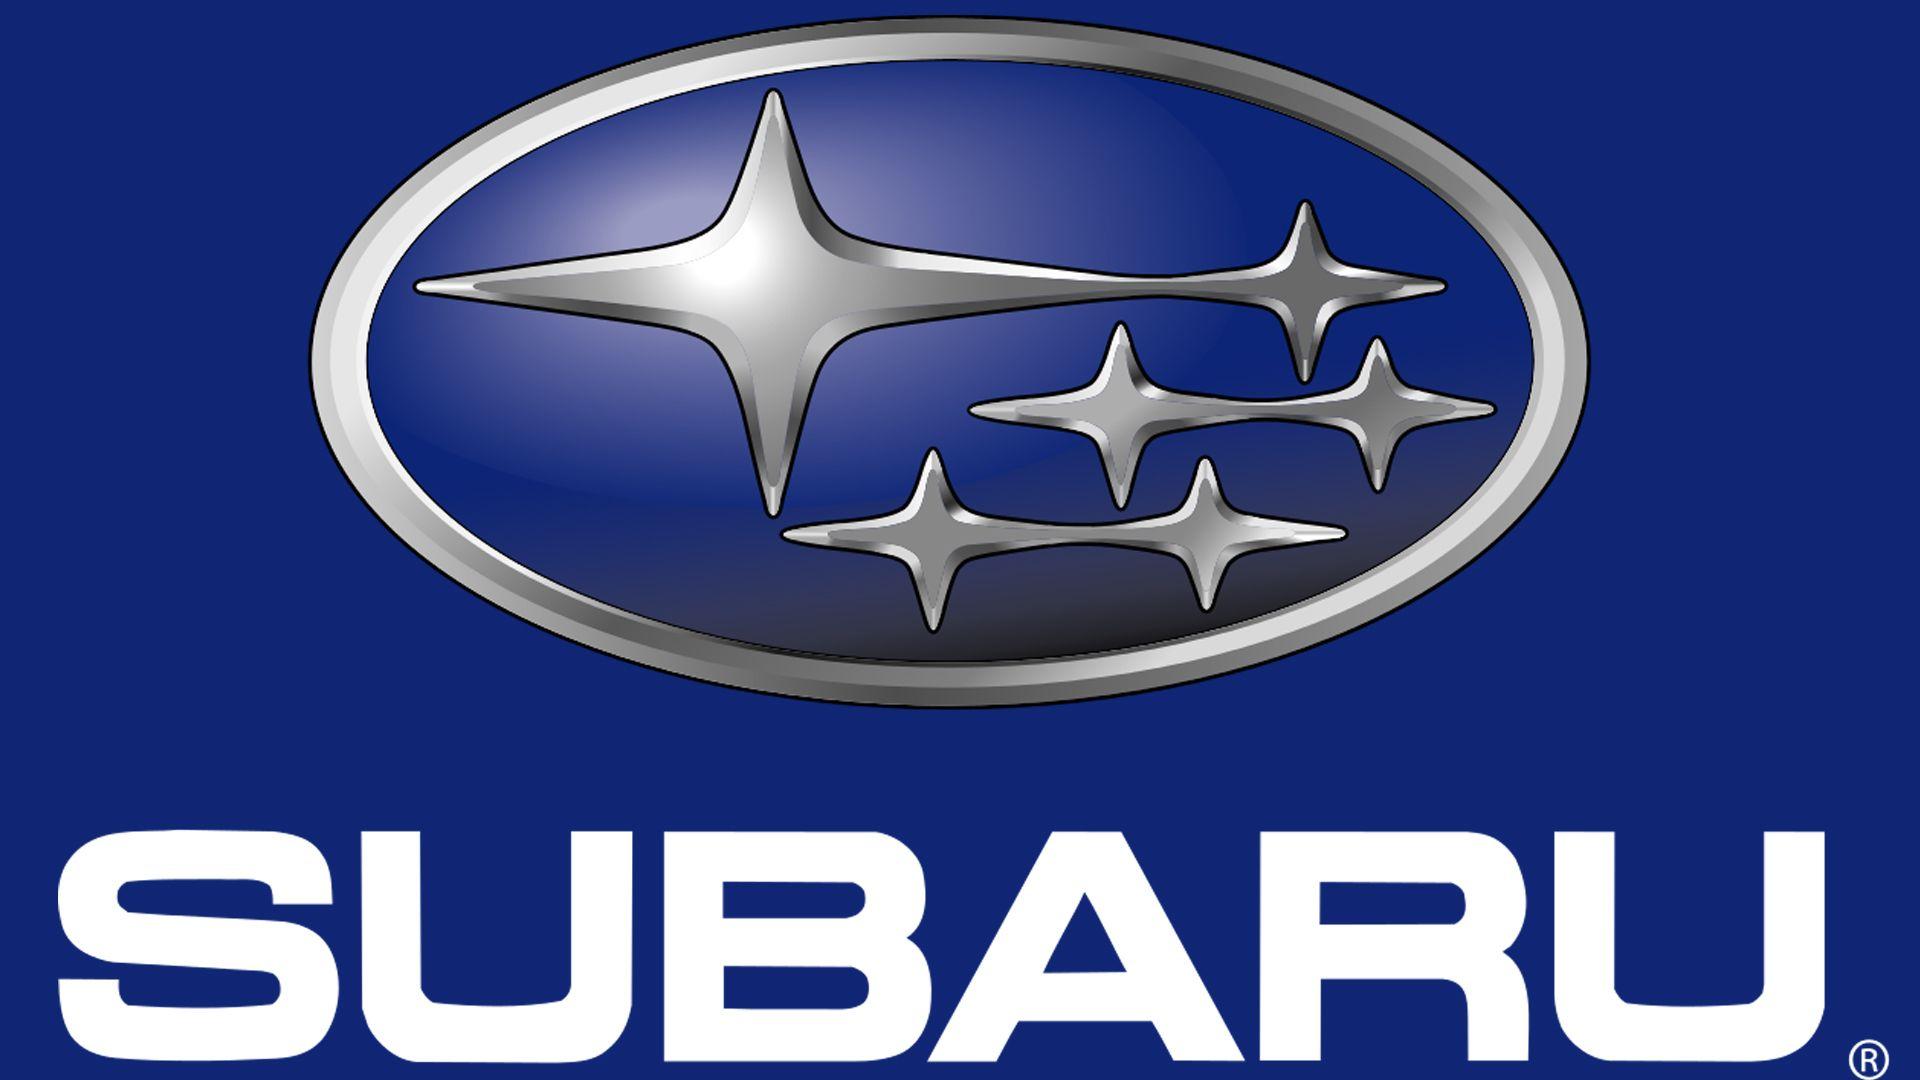 Subaru Logo - Subaru Logo, Subaru Symbol, Meaning, History and Evolution